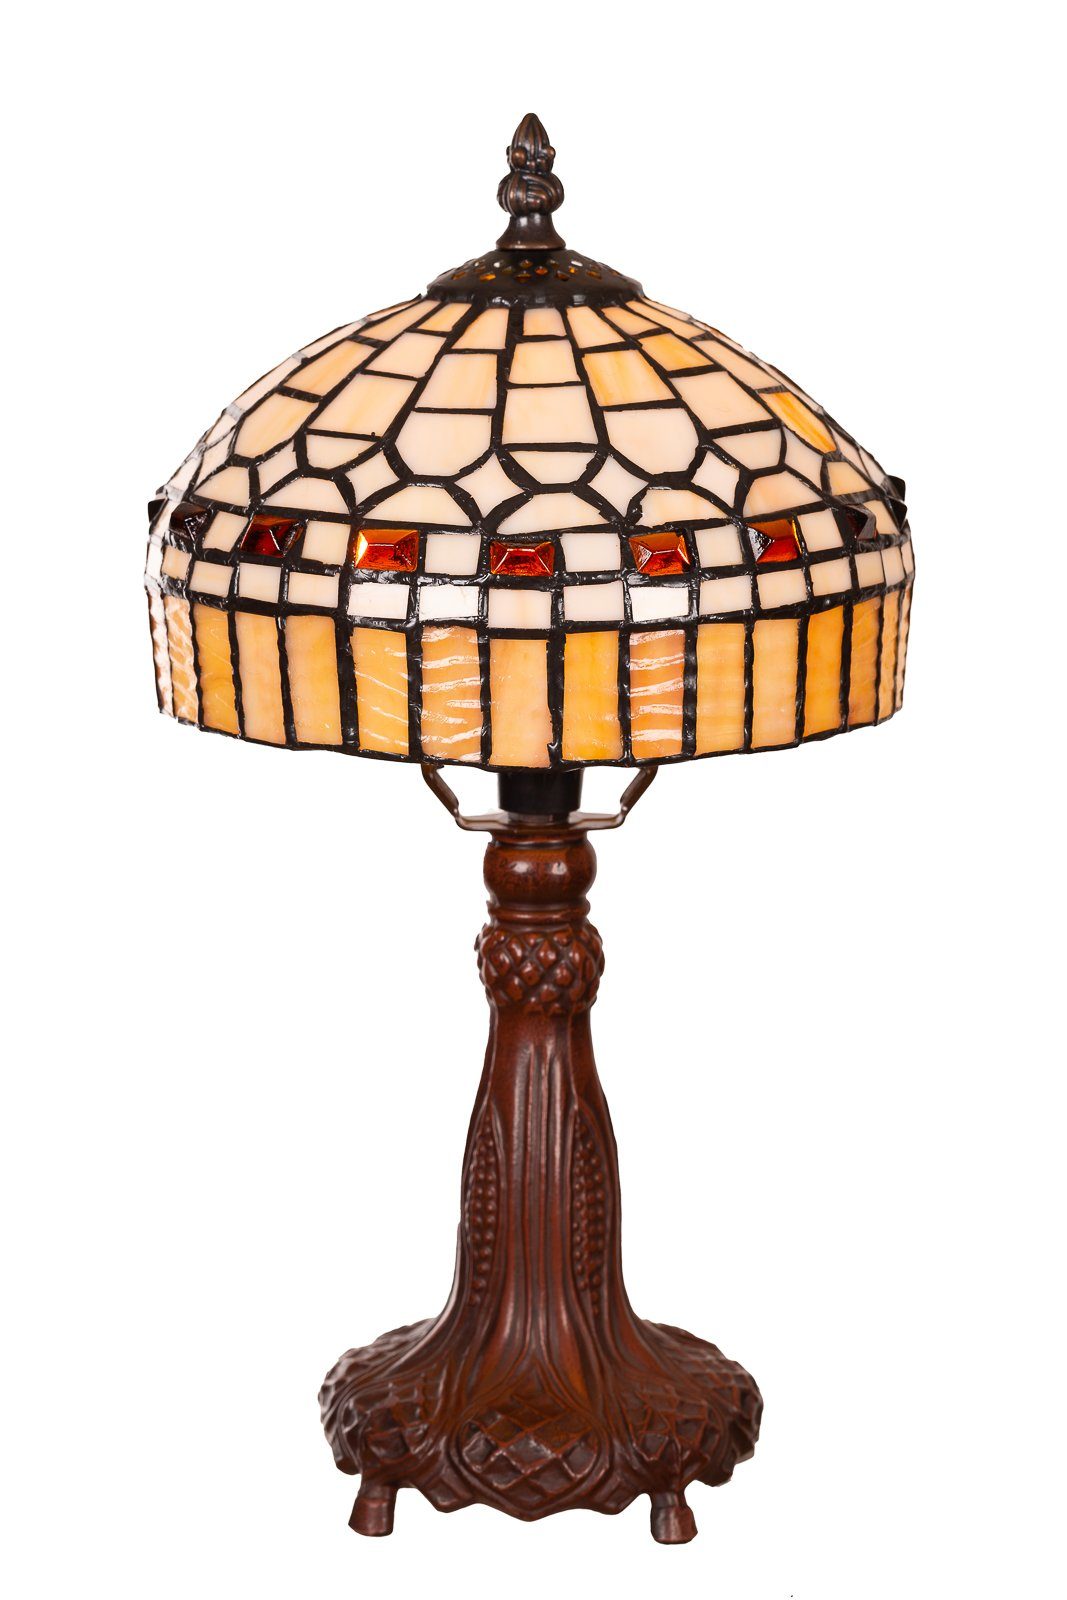 Motiv Stehlampe Dekorationslampe BIRENDY Ti145 Style Tiffany Moaikmotiv Lampe Tischlampe